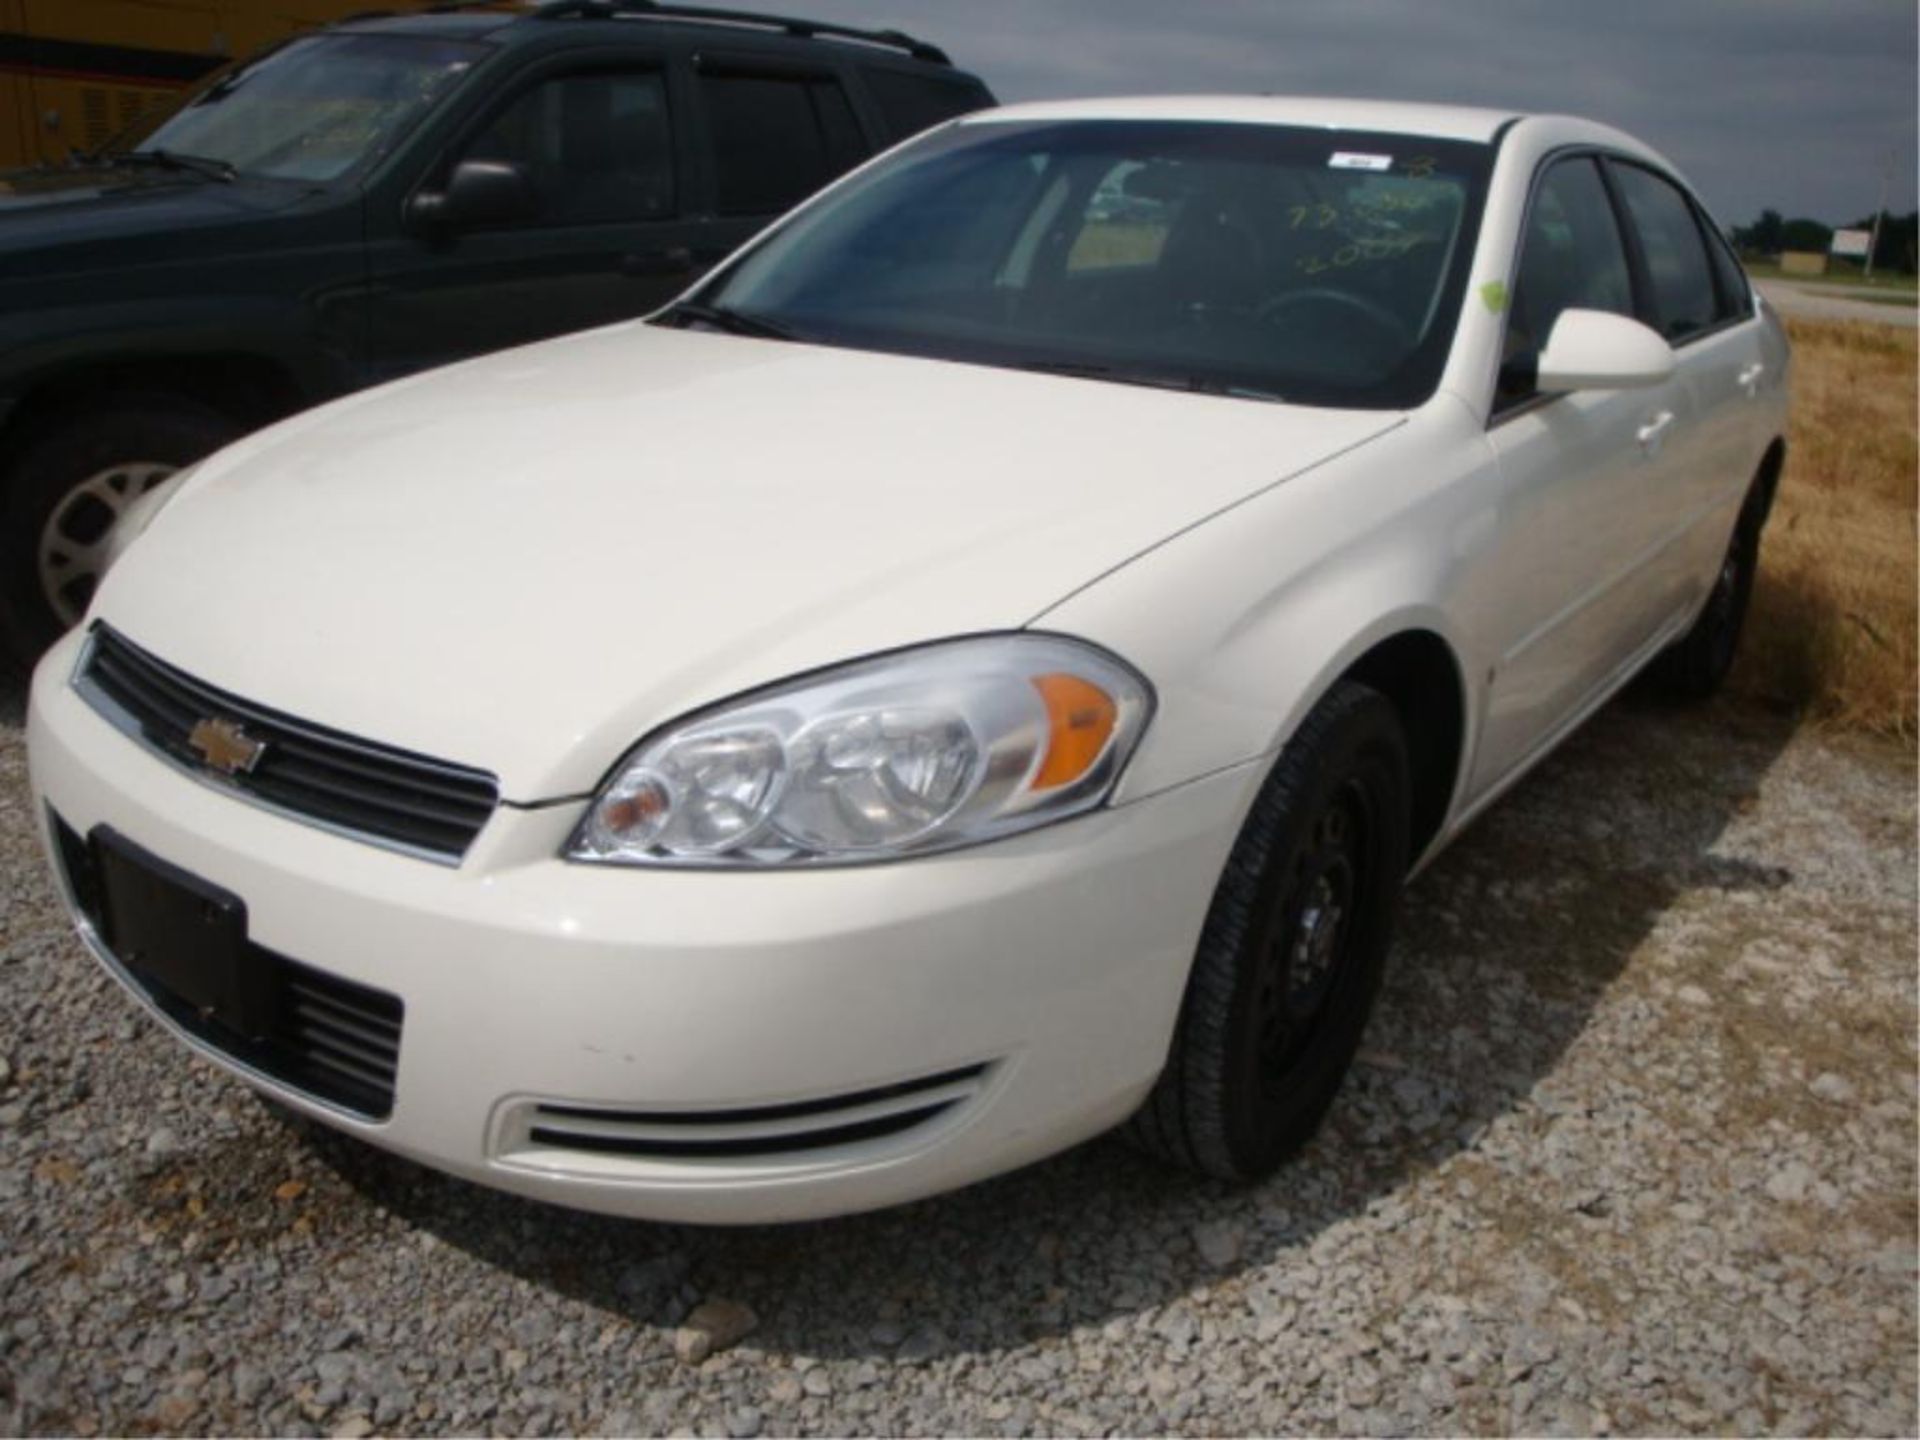 (Title) 2007 Chevrolet Impala 4 door, 3900 V6,73,036 mi. vin 2G1WS55R979417943 - Image 2 of 10